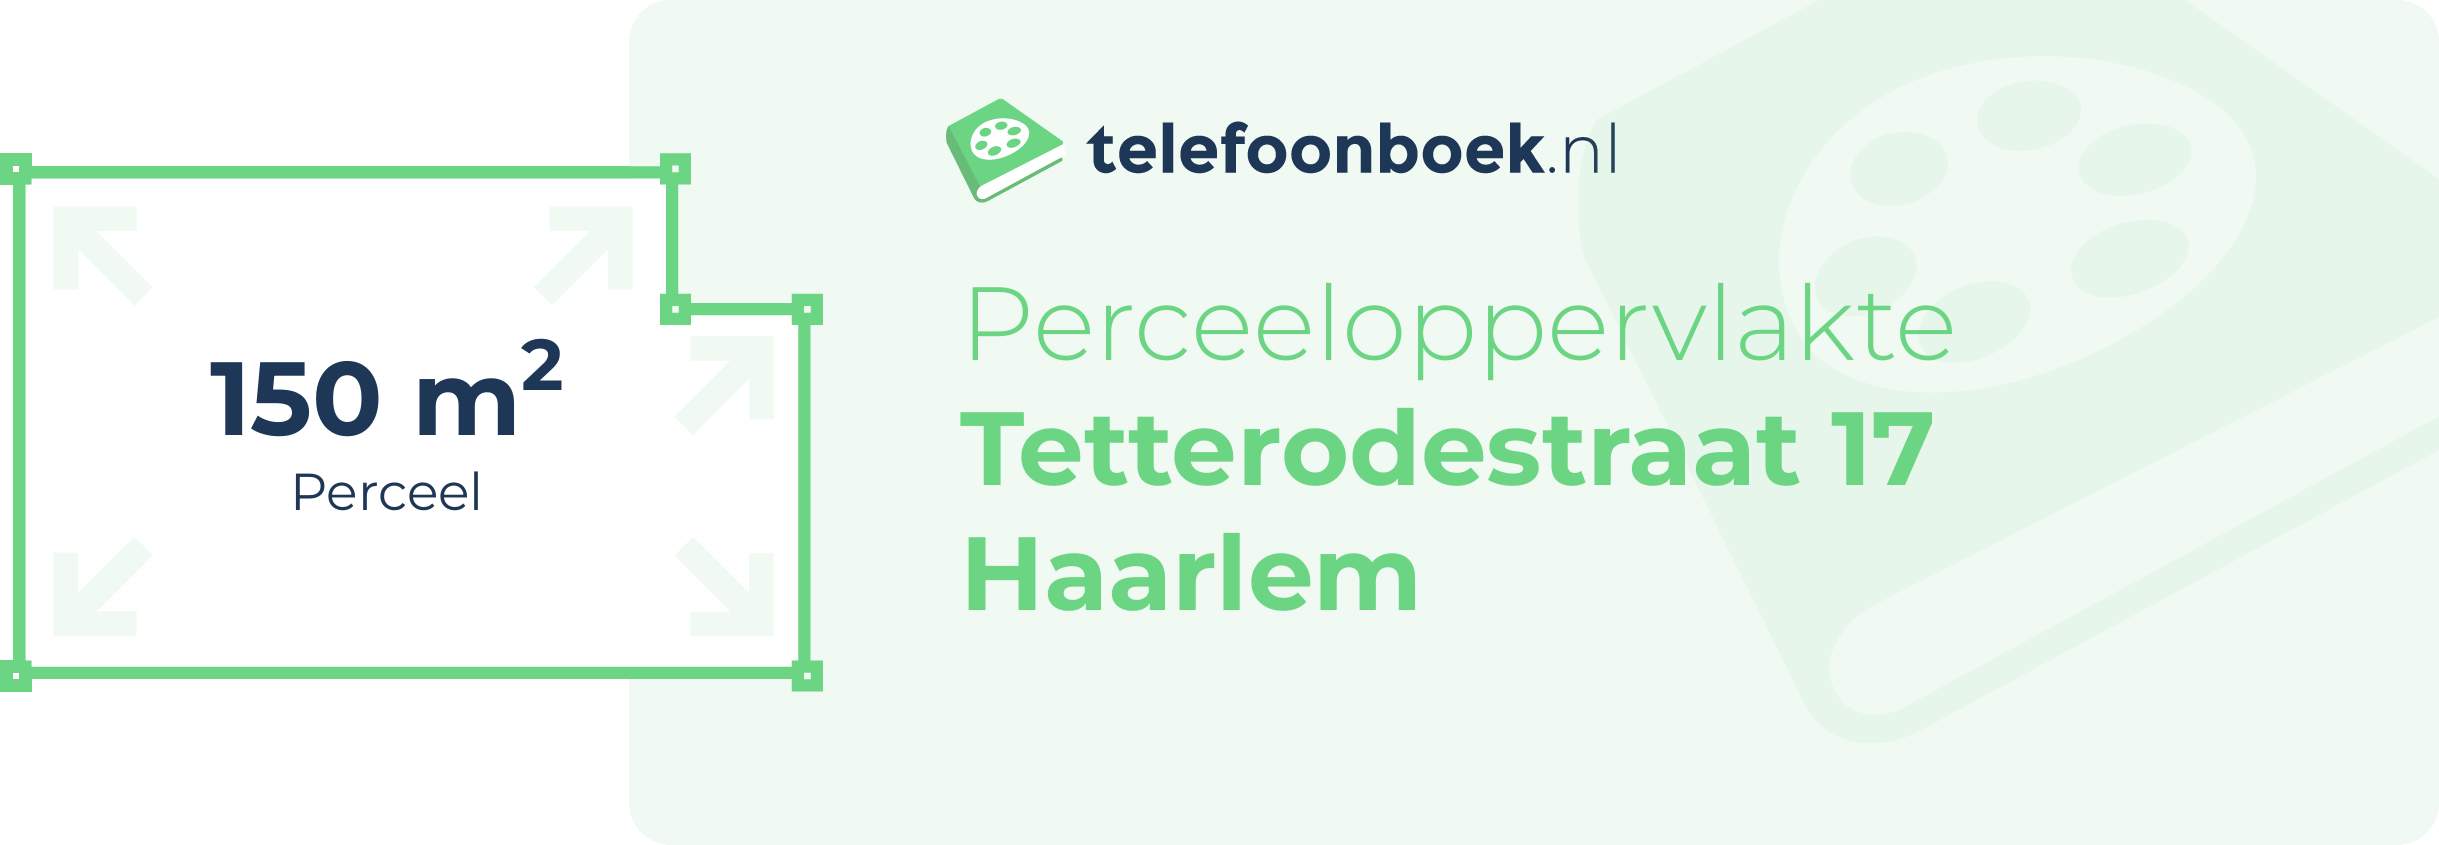 Perceeloppervlakte Tetterodestraat 17 Haarlem